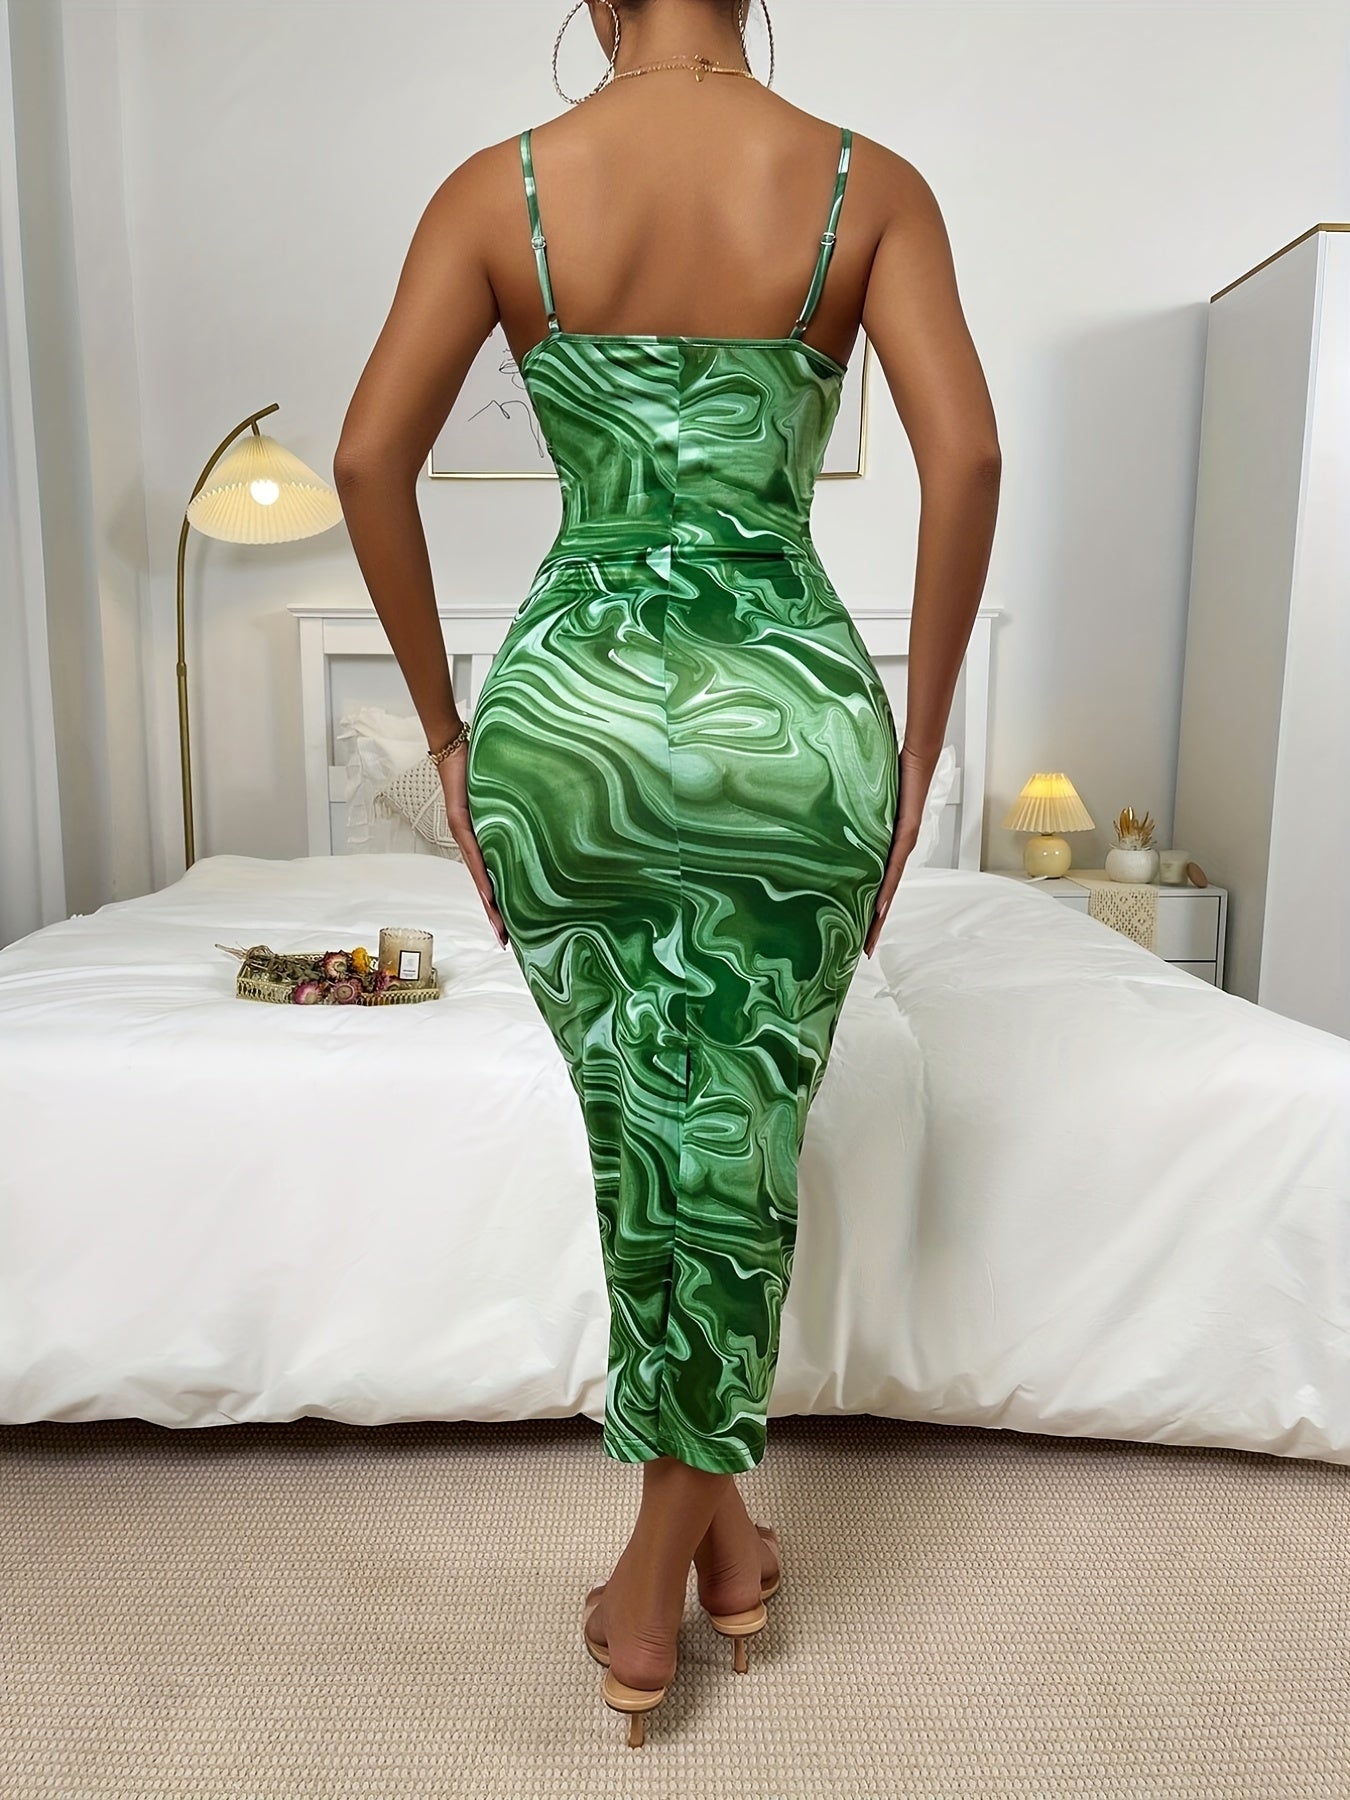 Antmvs Abstract Ripple Print Dress, Sexy Split Spaghetti Strap Backless Dress, Women's Clothing